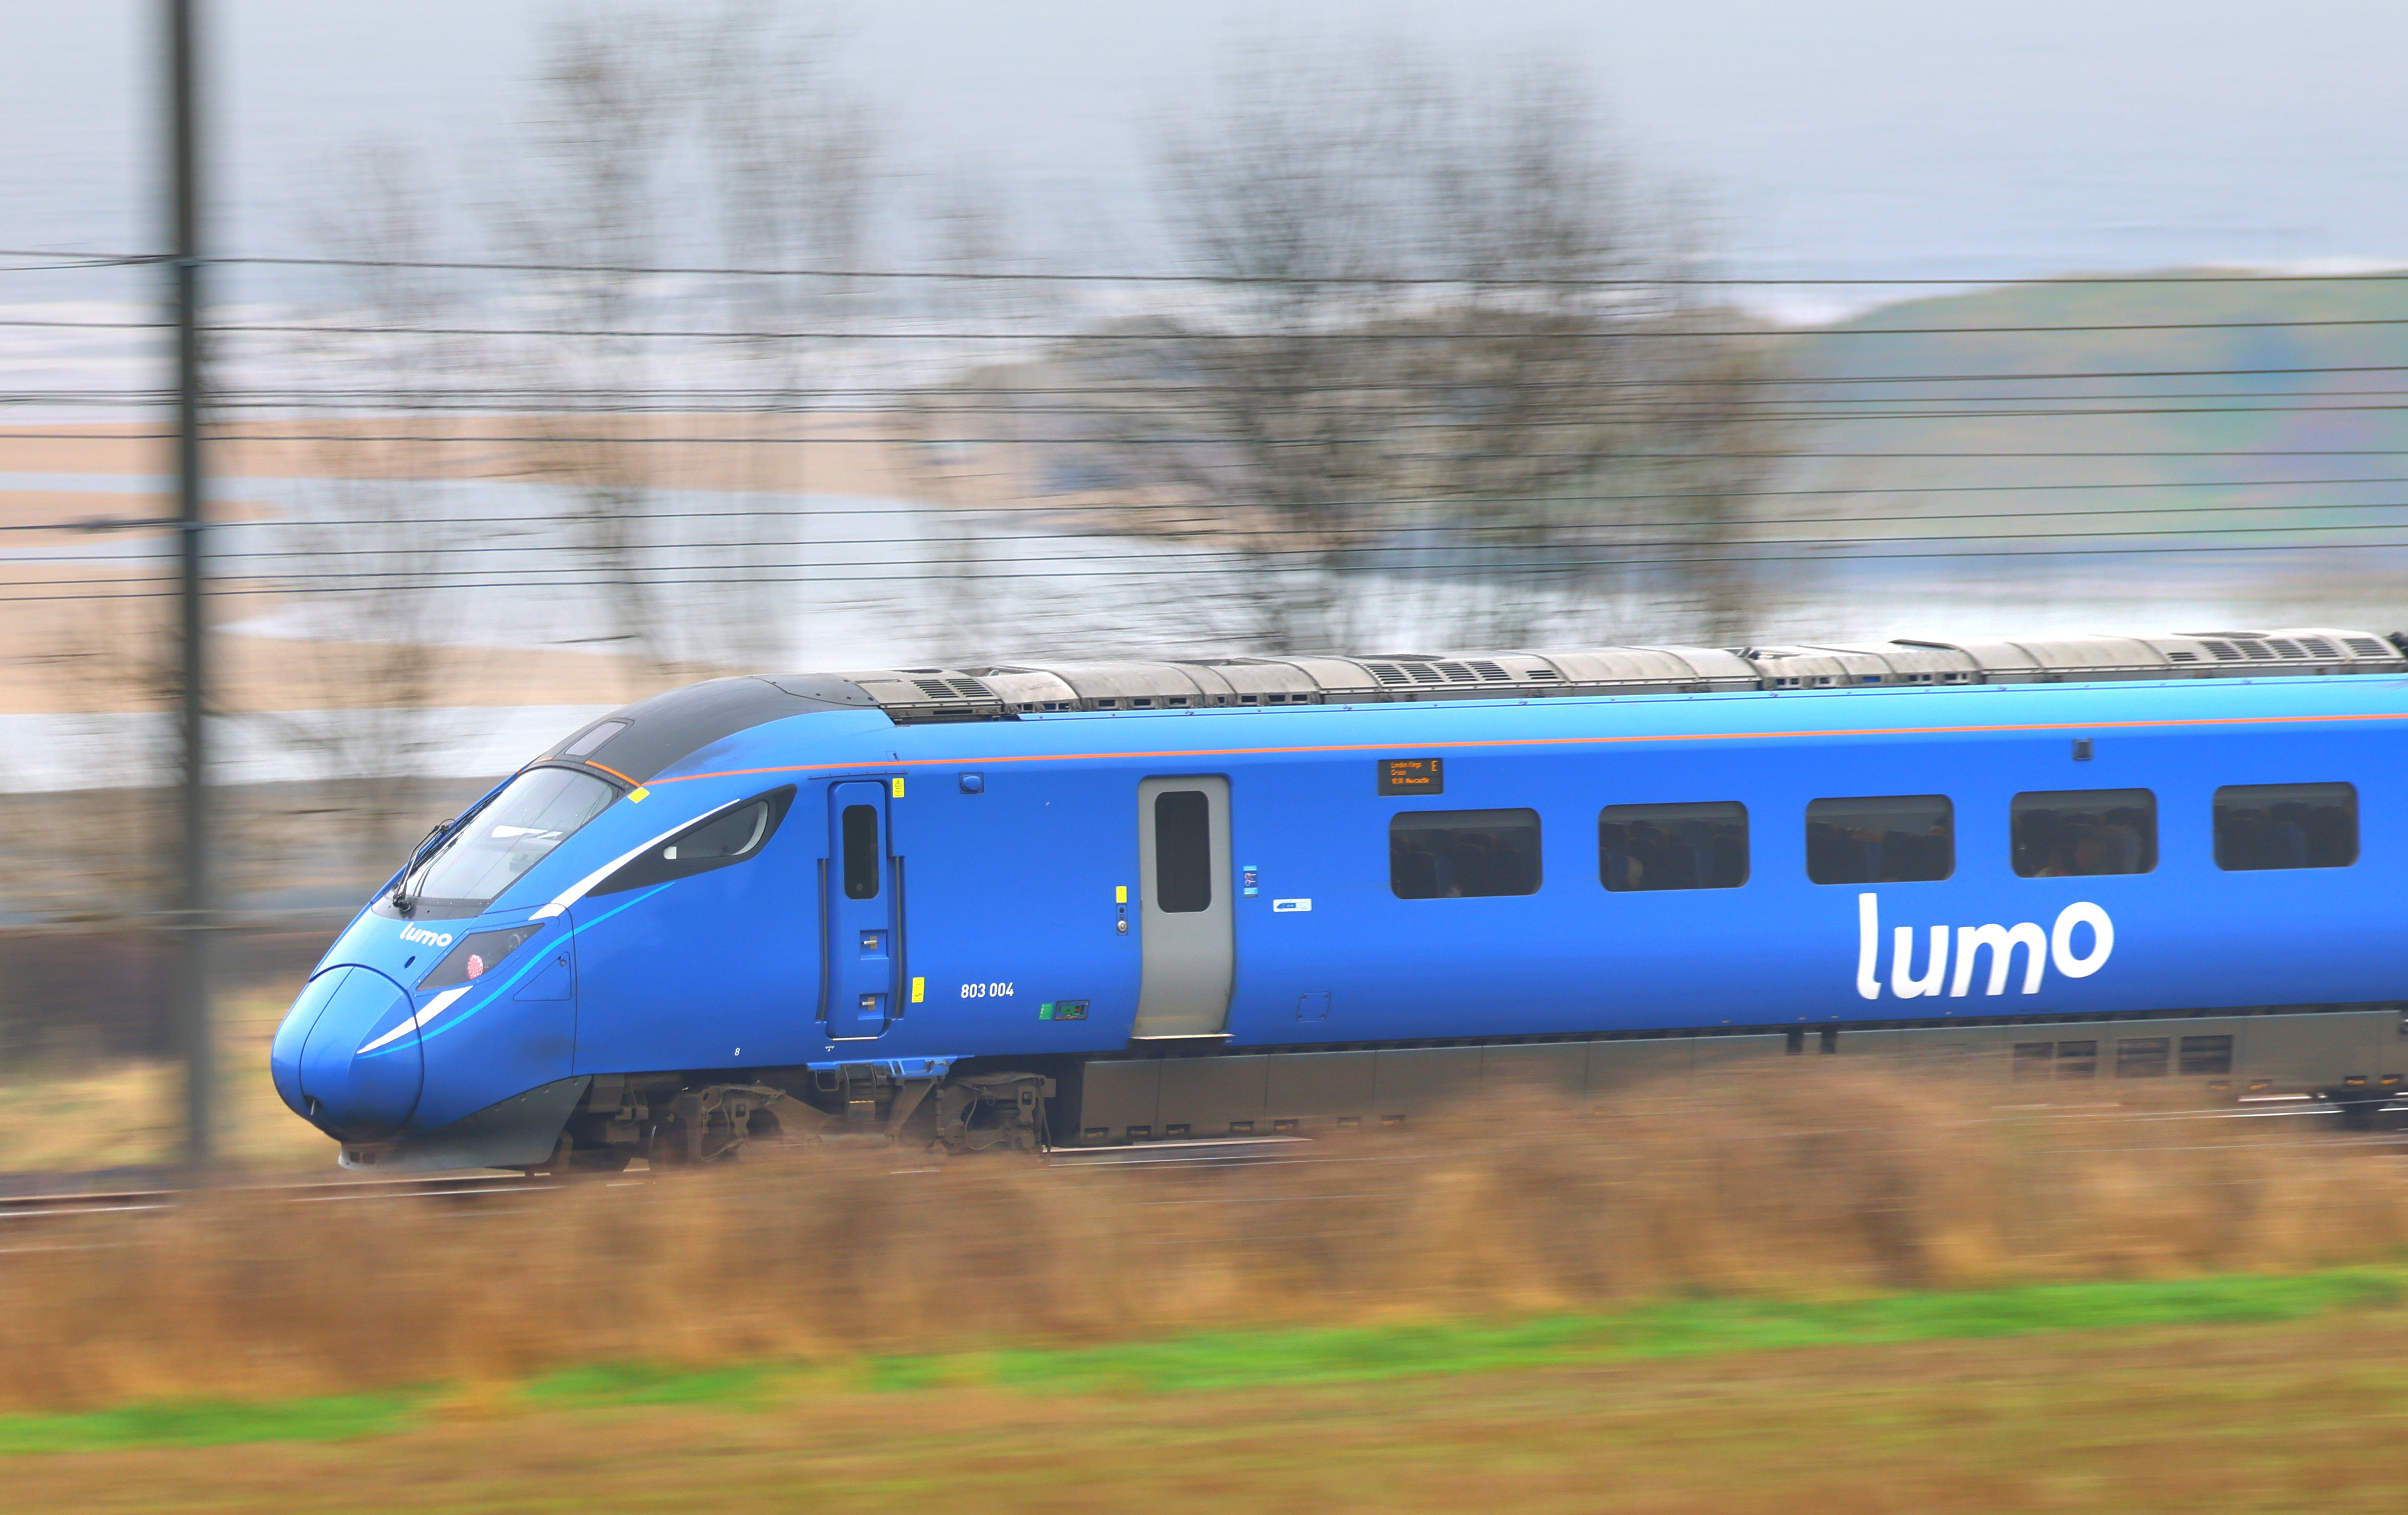 Lumo train racing through countryside